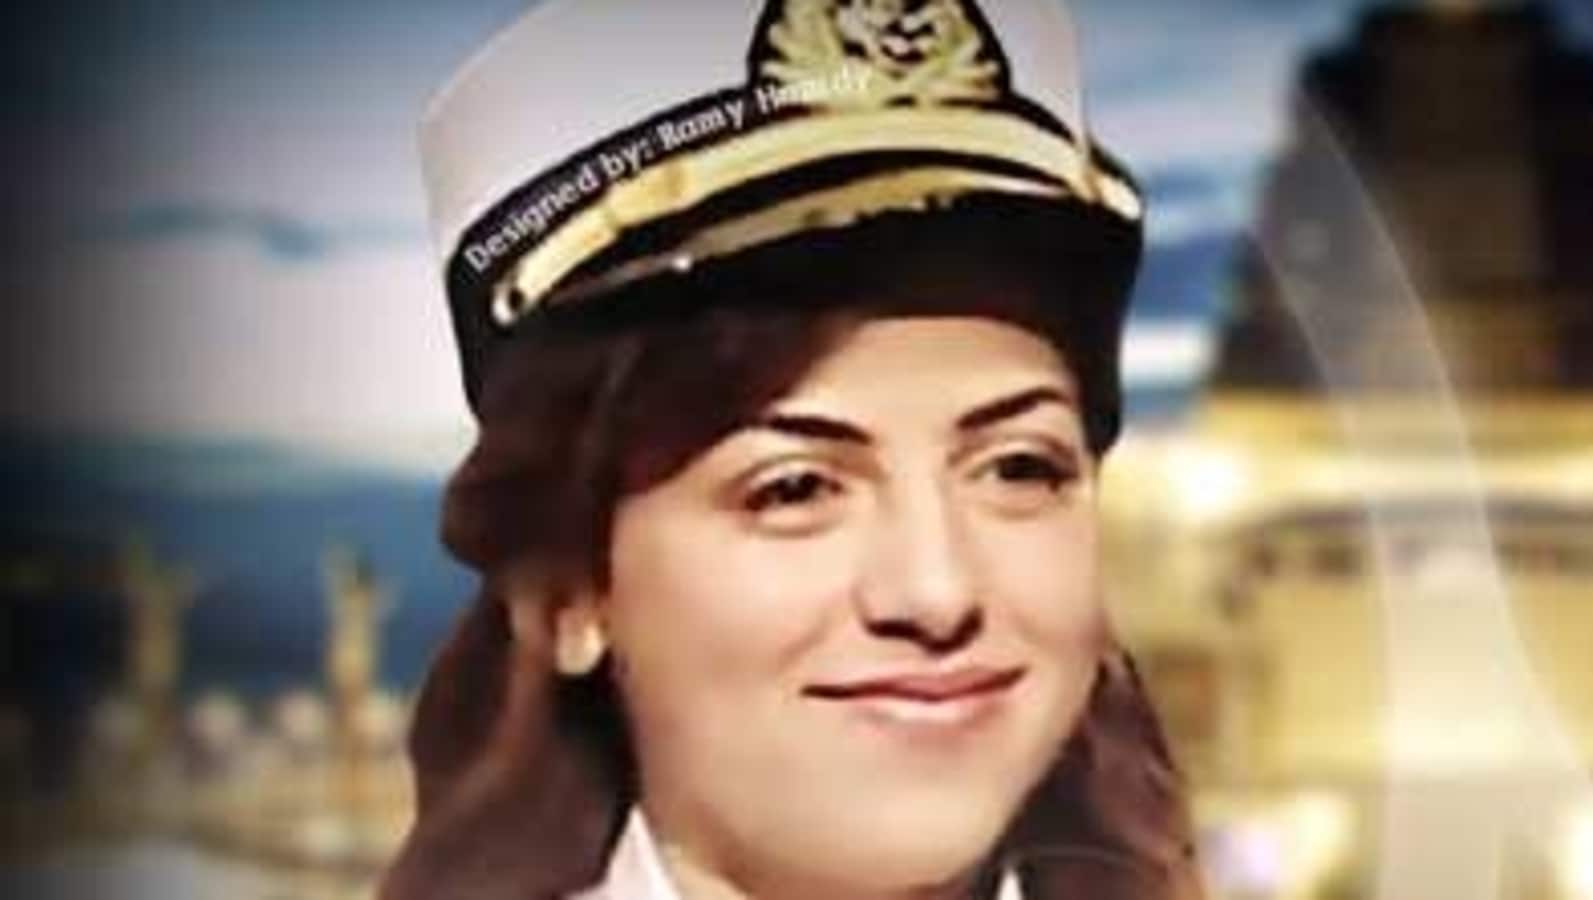 Egypt’s first female ship captain Marwa Elselehdar says ‘blamed for blocking Suez Canal’
| Hindustan Times